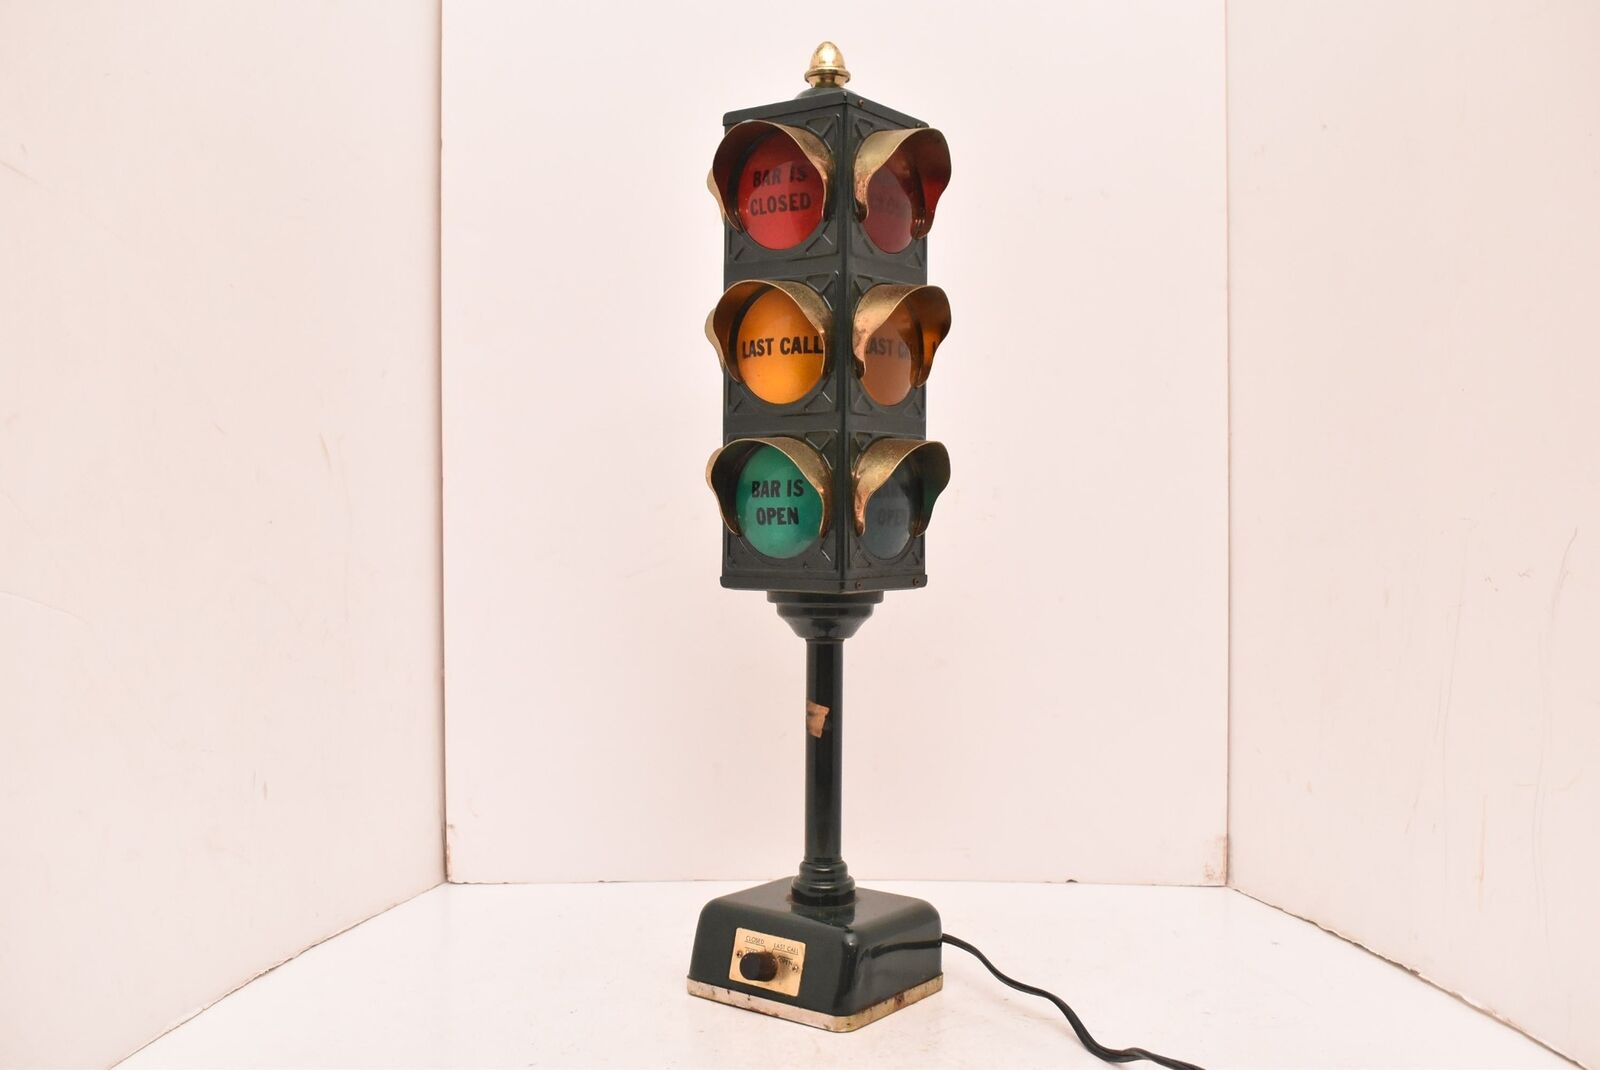 VTG 1960s B&B Bar Lamp Stop Light Traffic Signal OPEN CLOSED LAST CALL MAN CAVE=